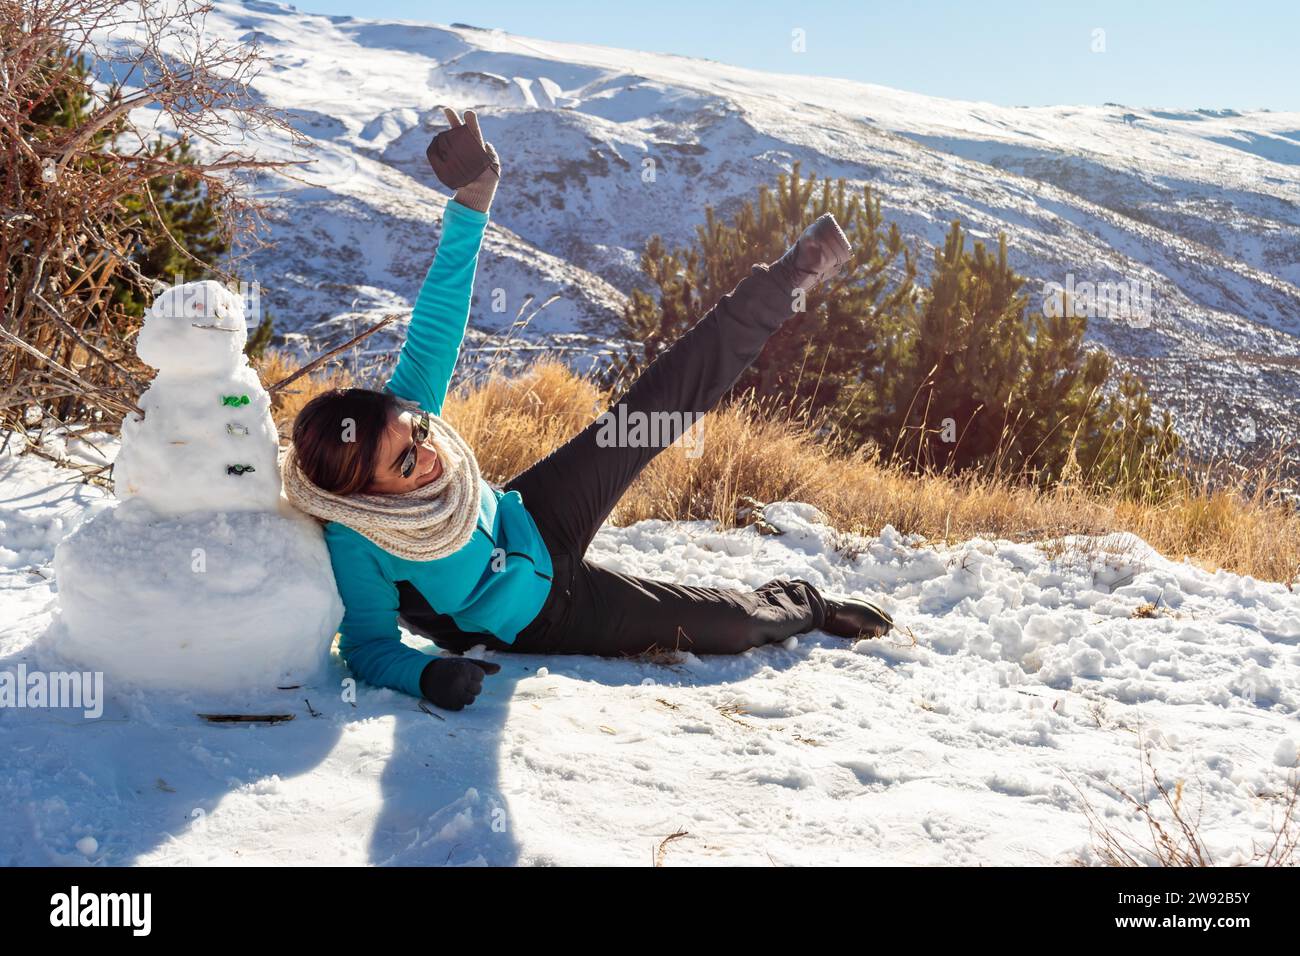 Winter Playtime Latina Woman Having Fun Next to Snowman in Snowy Scene Stock Photo